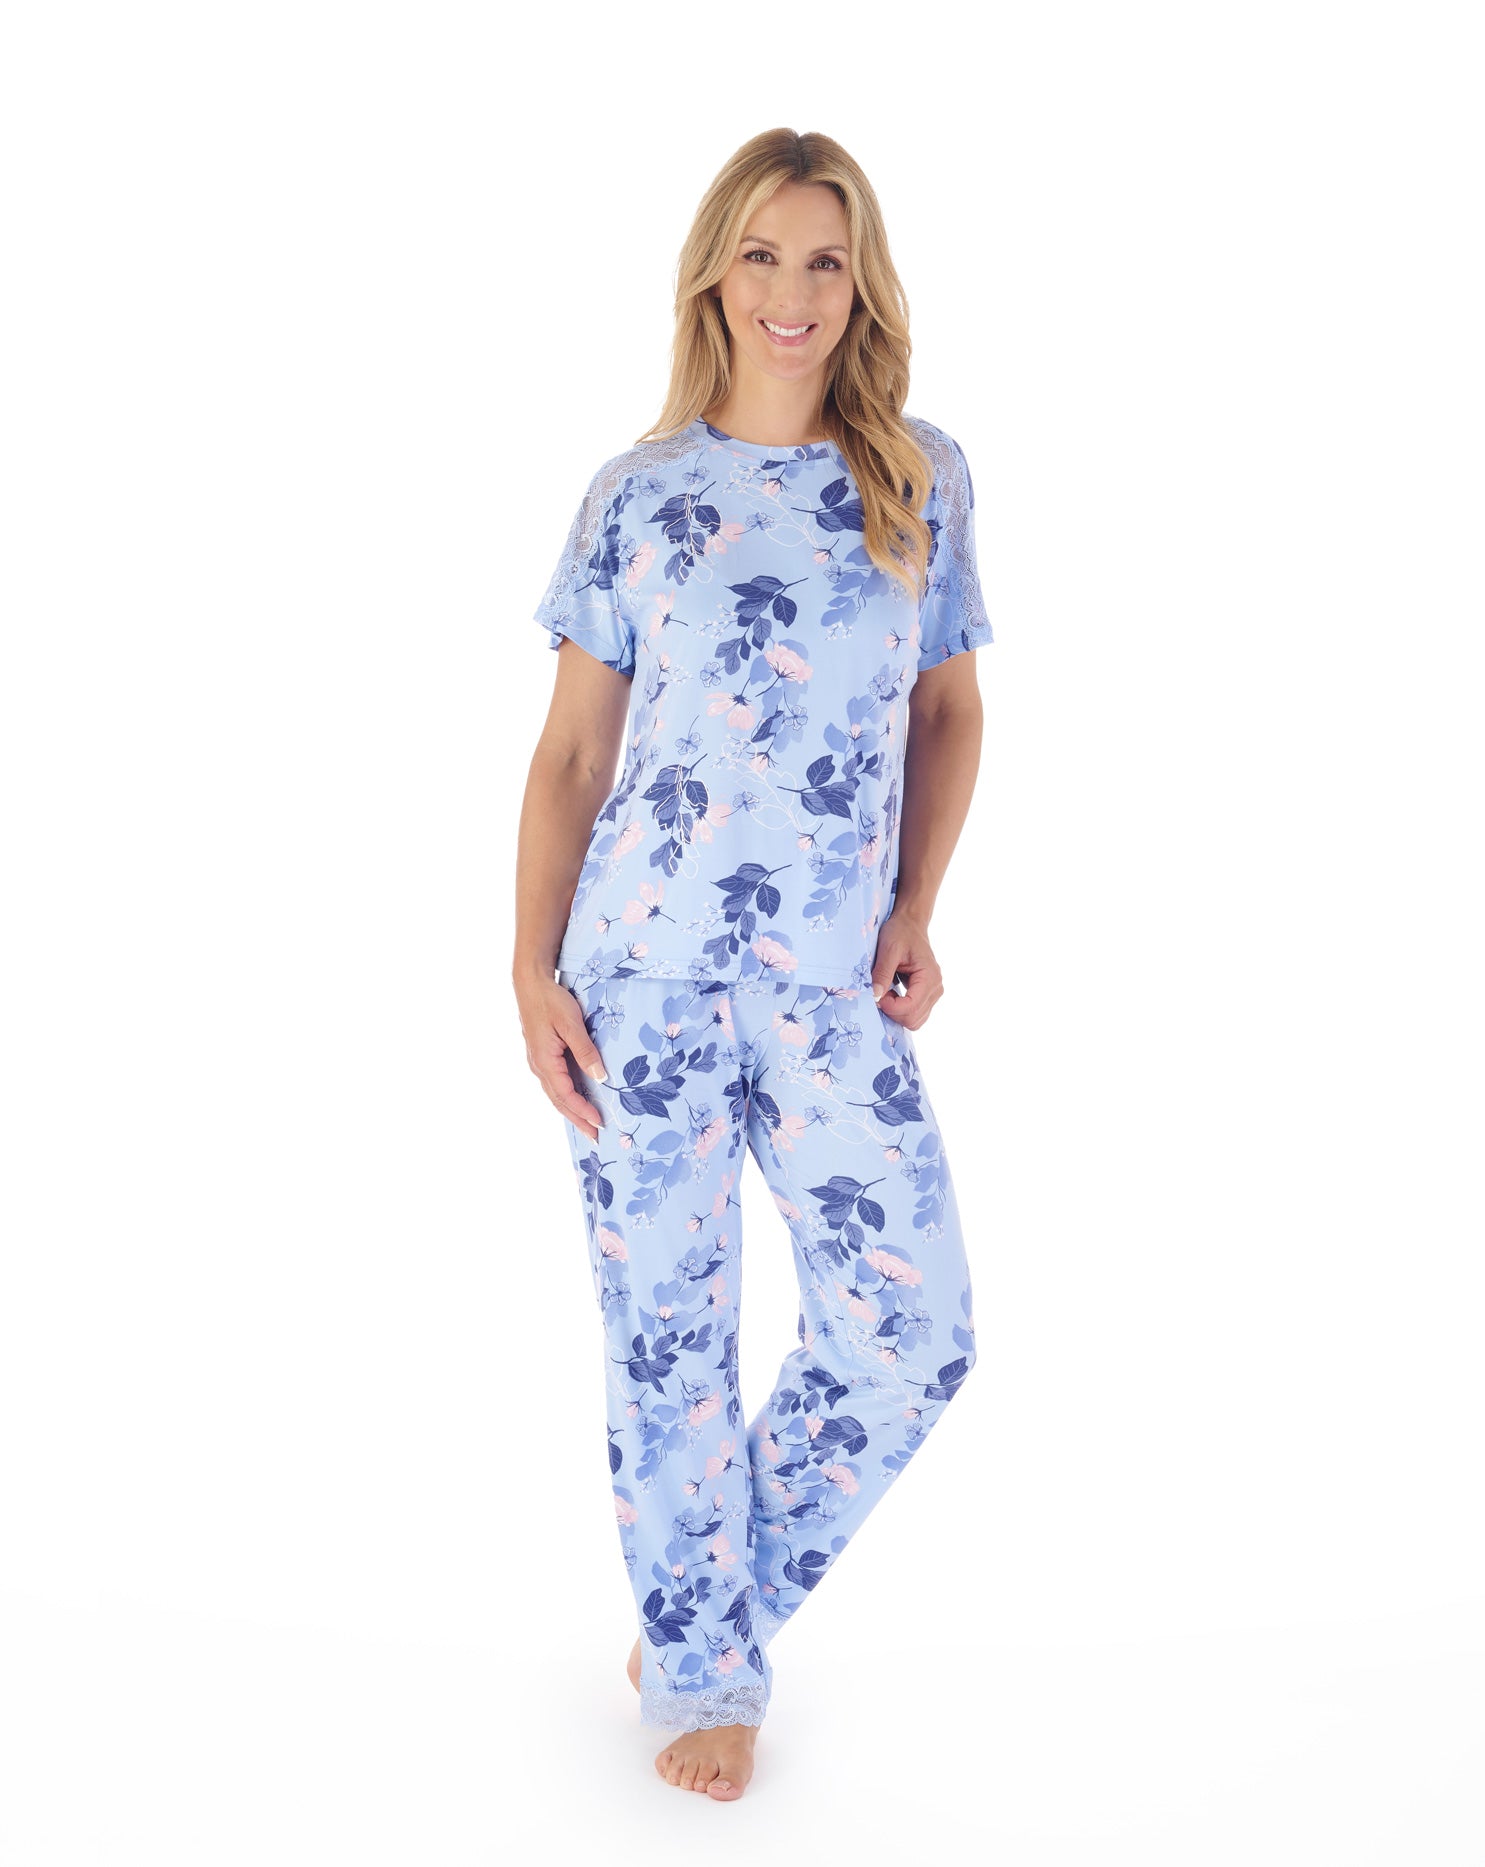 Supersoft Multi-Print and Solid Navy Pyjama Set GL03703